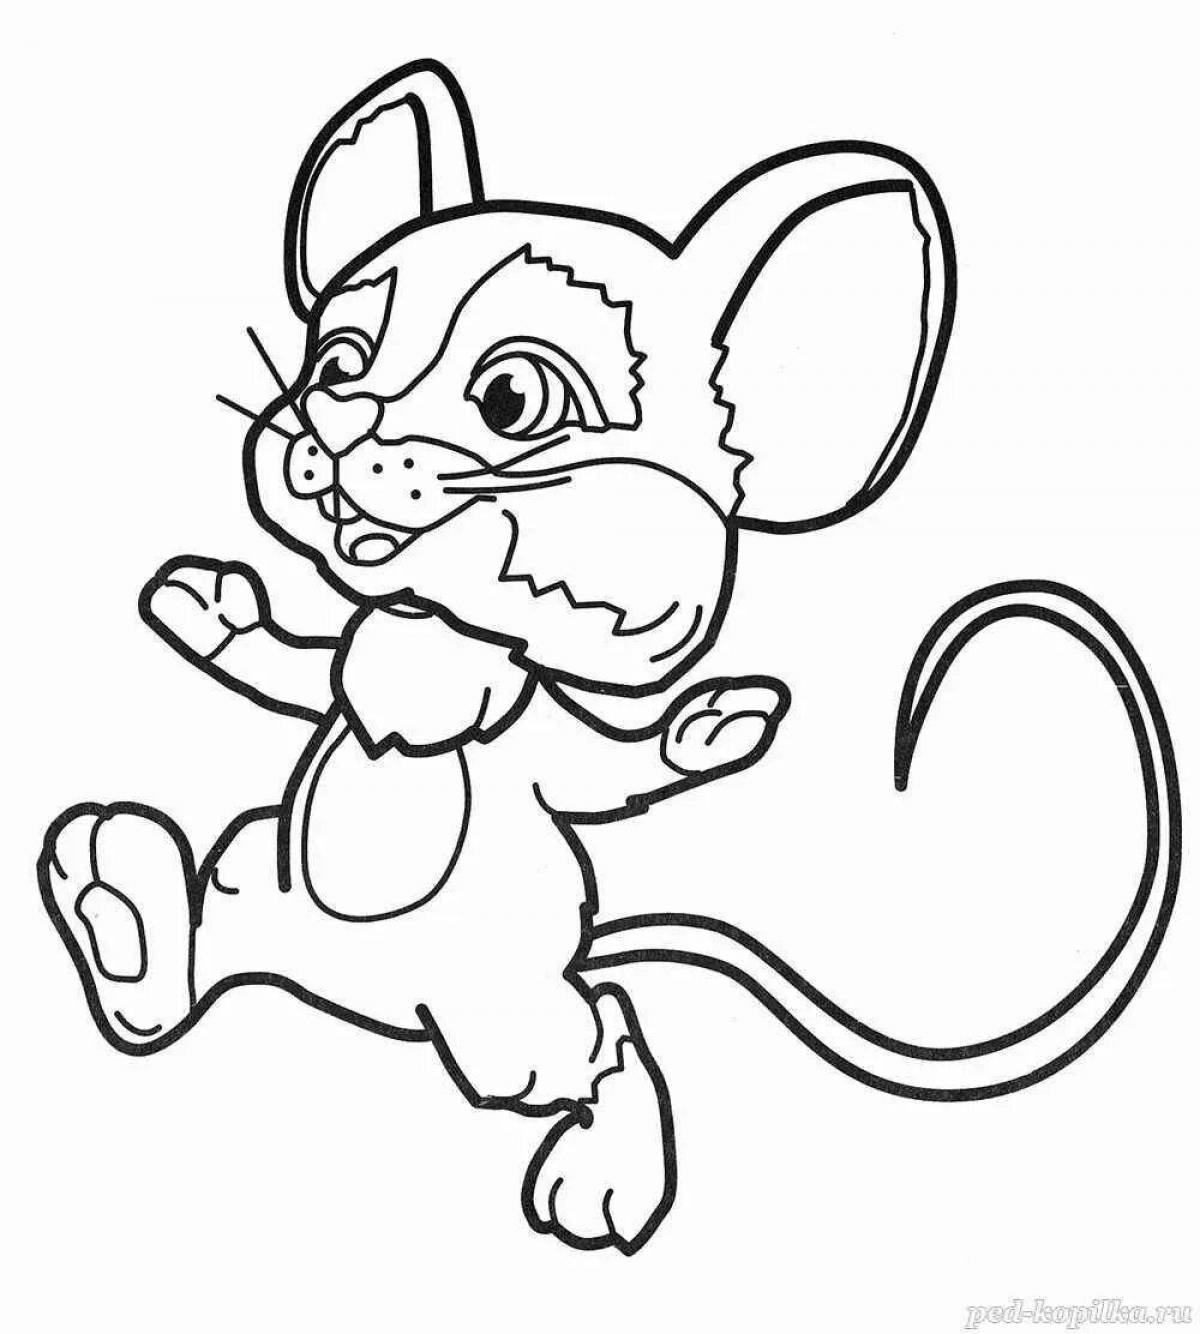 Coloring page festive mouse norushka